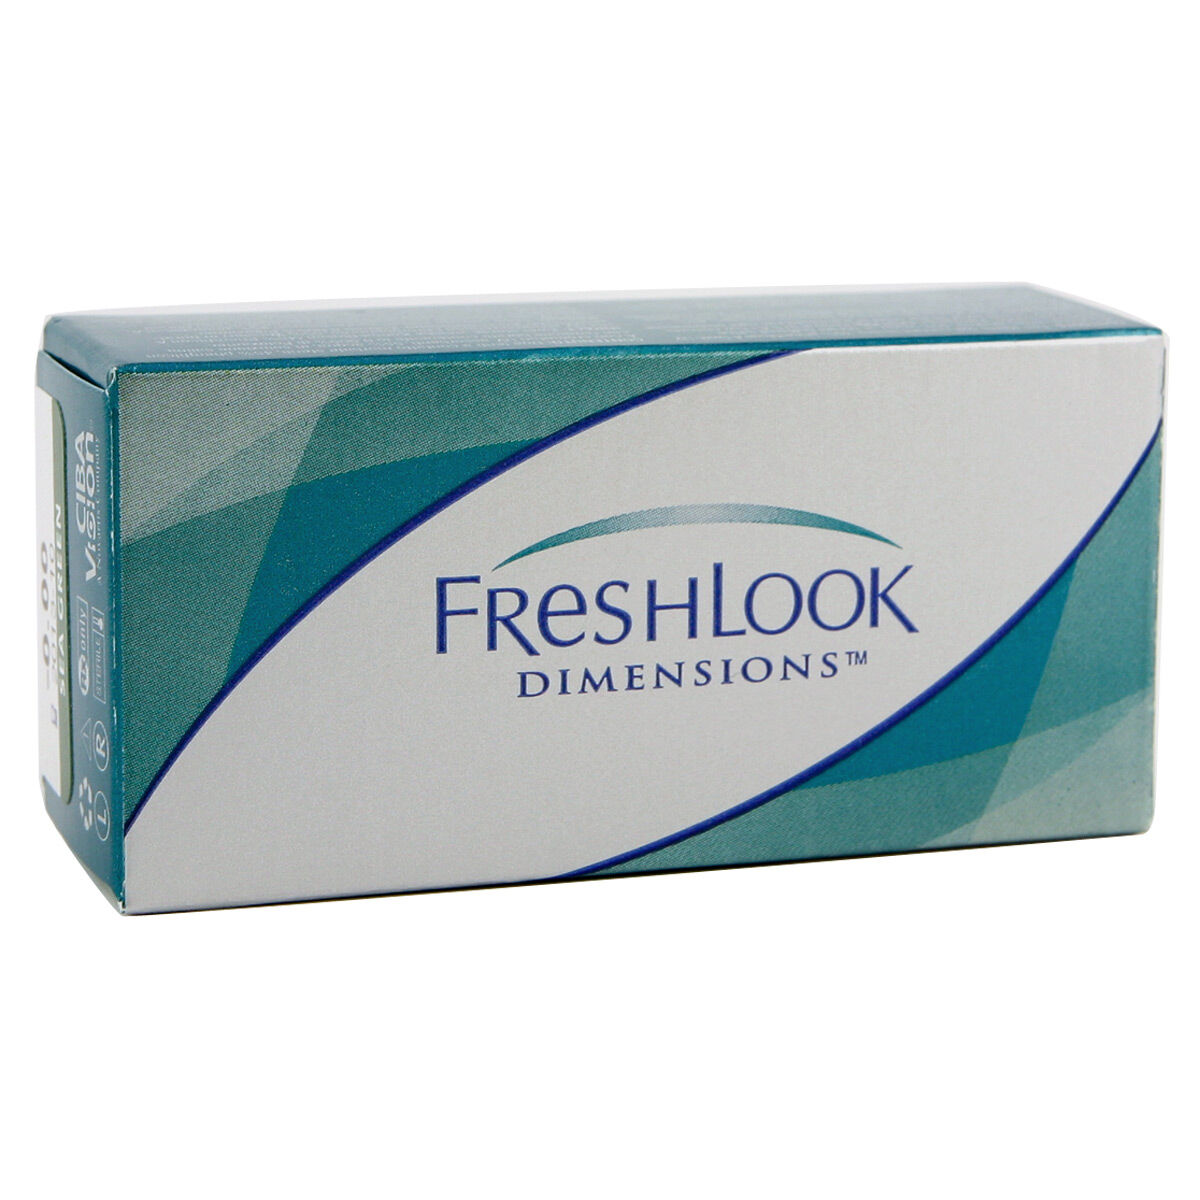 Alcon Freshlook Dimensions (6 Contact Lenses), Ciba Vision/Alcon, Coloured Monthly Lenses, Phemfilcon A